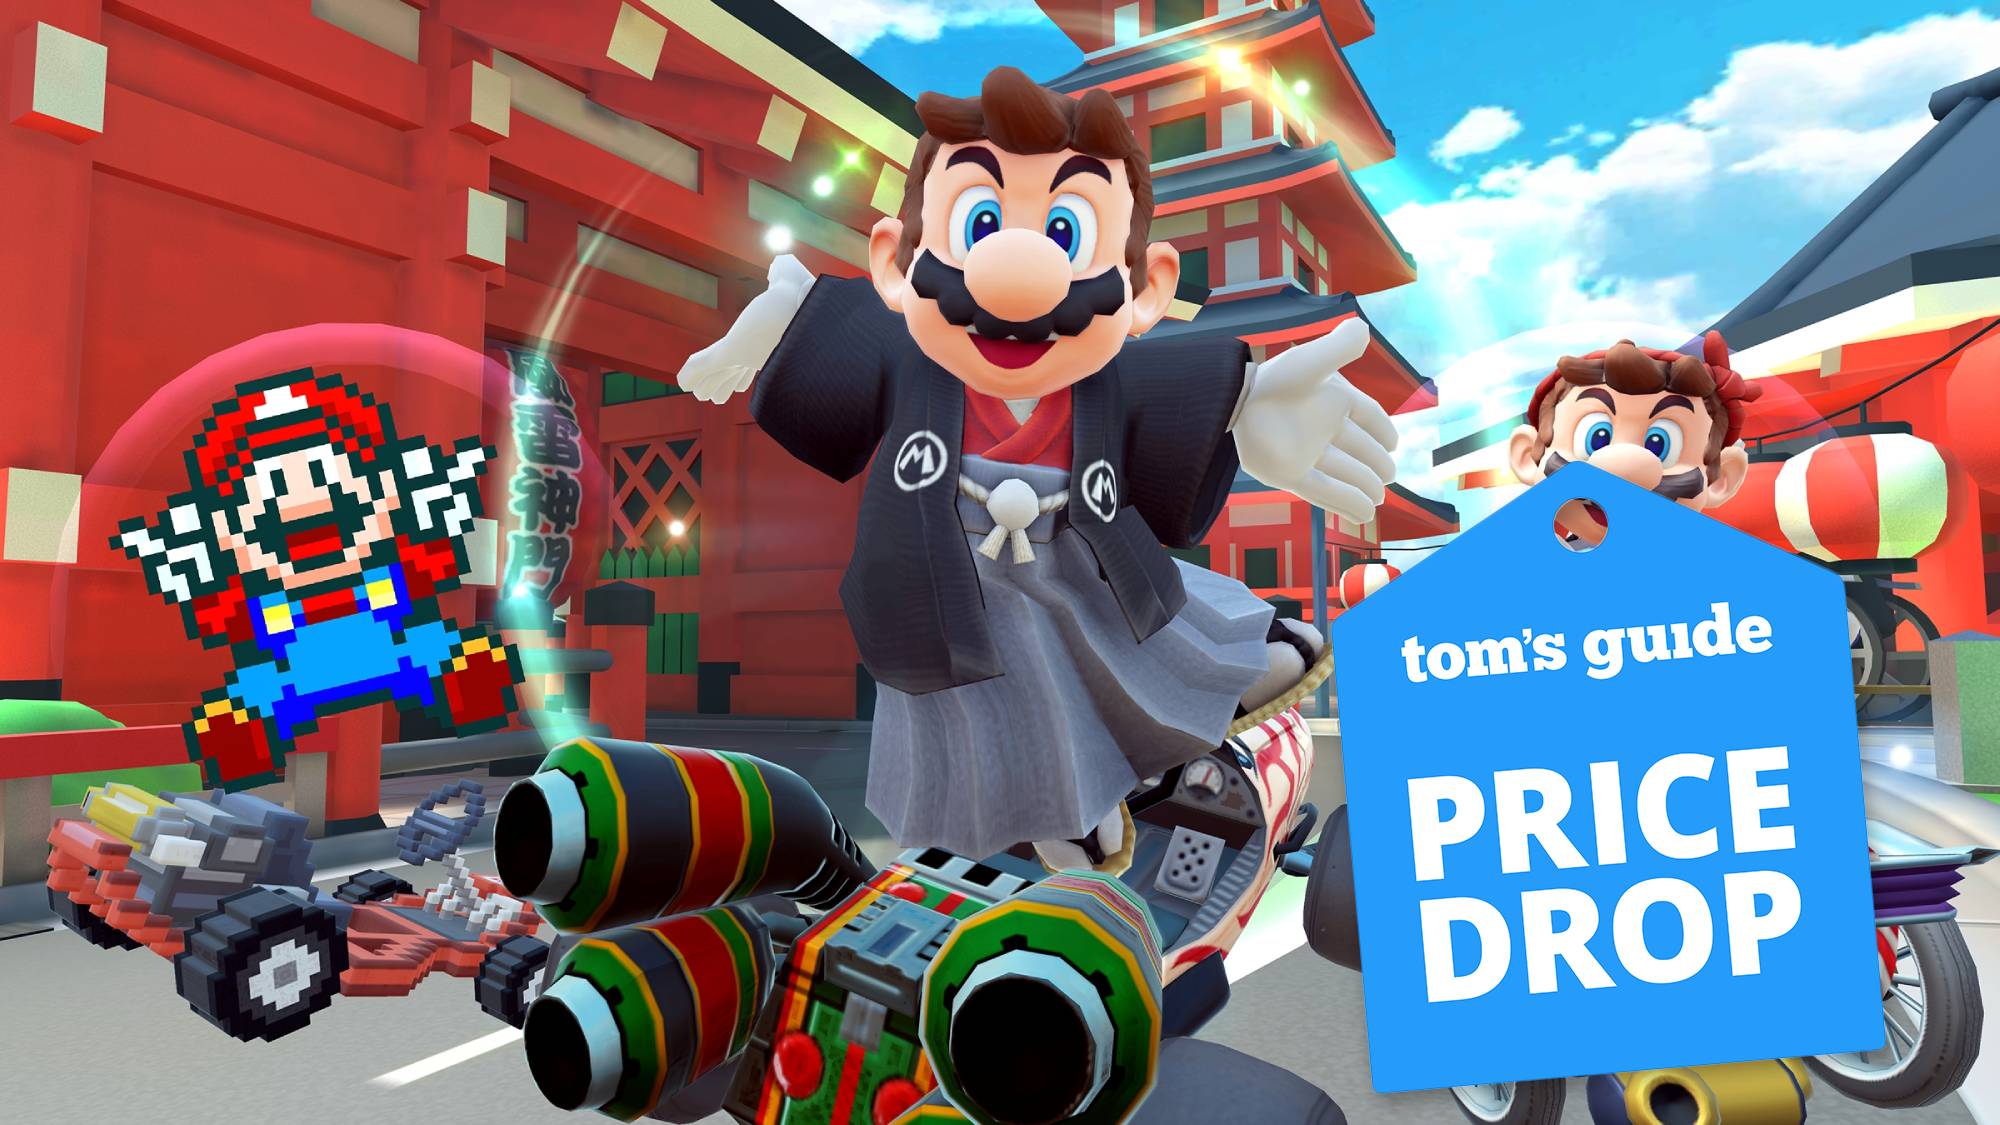 Super Mario Odyssey - Mushroom Kingdom Walkthrough – SAMURAI GAMERS